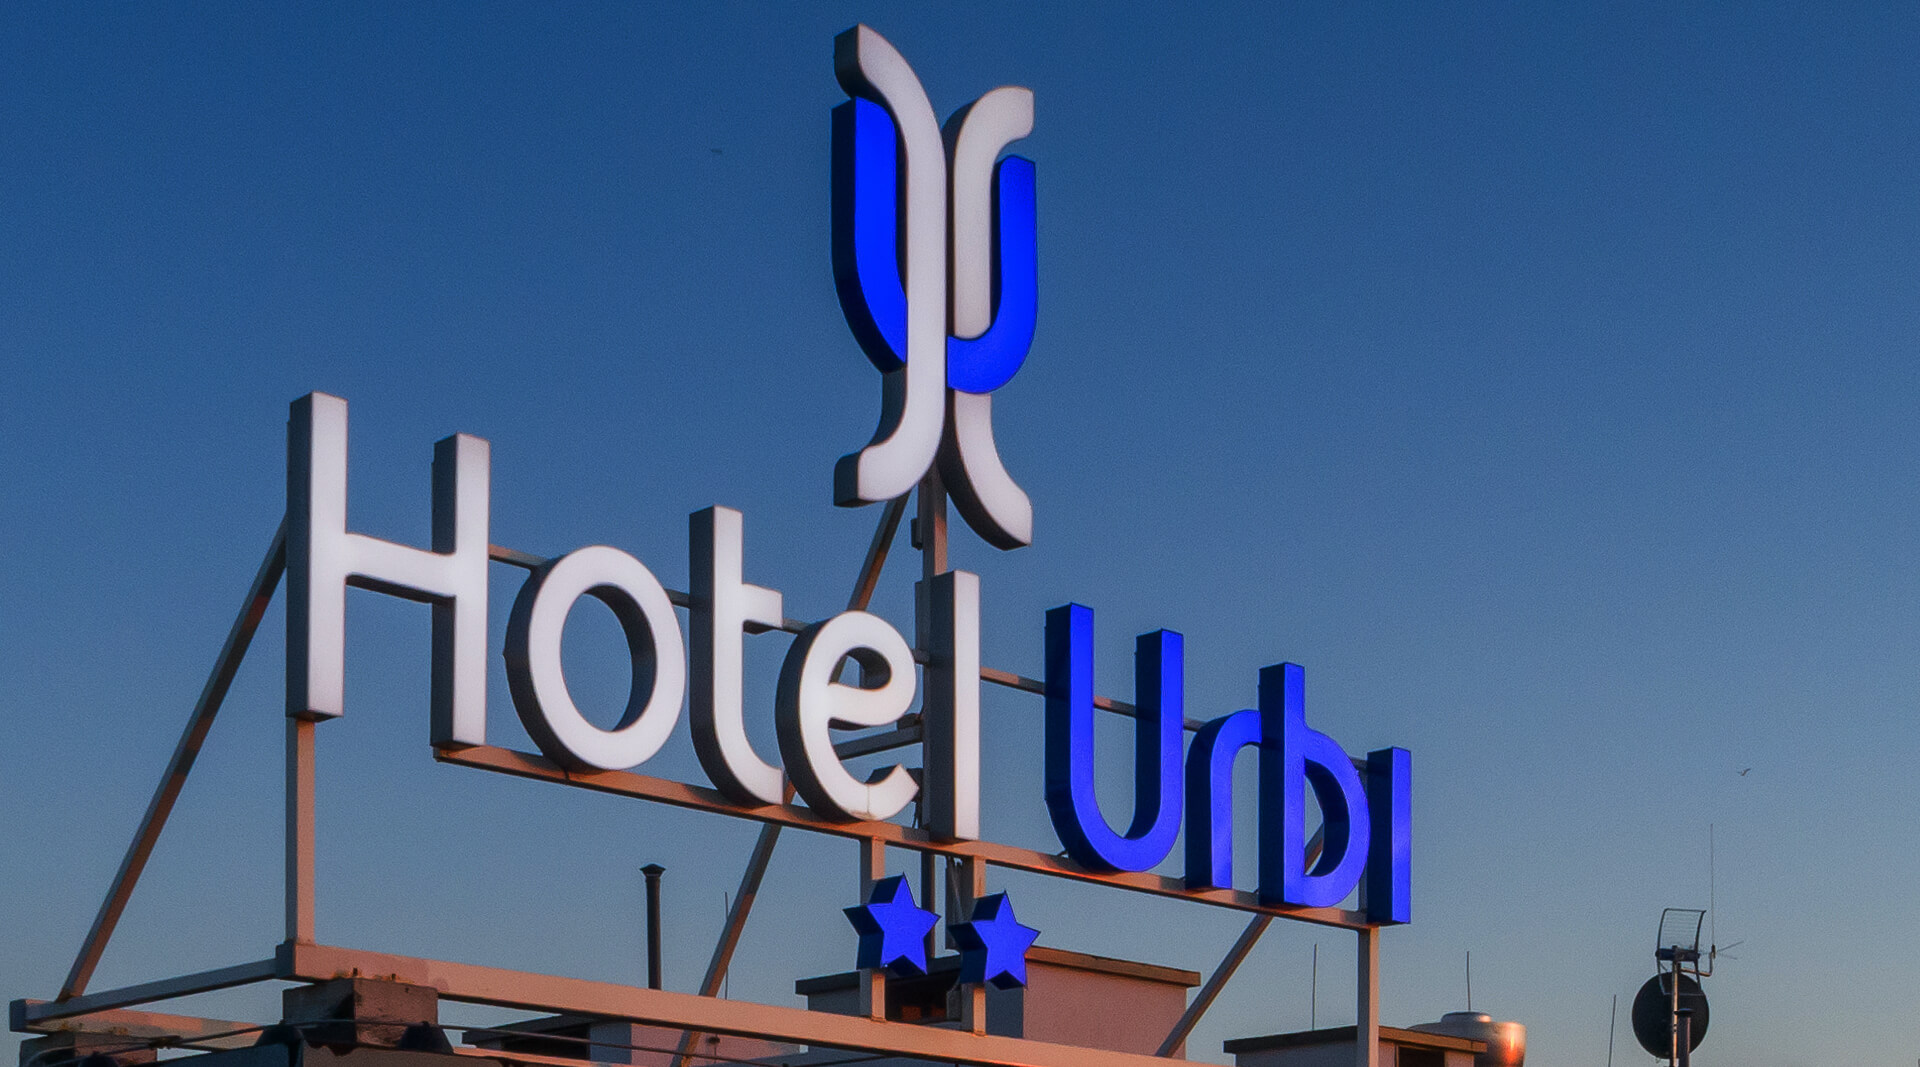 urbi-hotel-litery - urbi-hotel-litery-hotel-urbi-litery-reklama